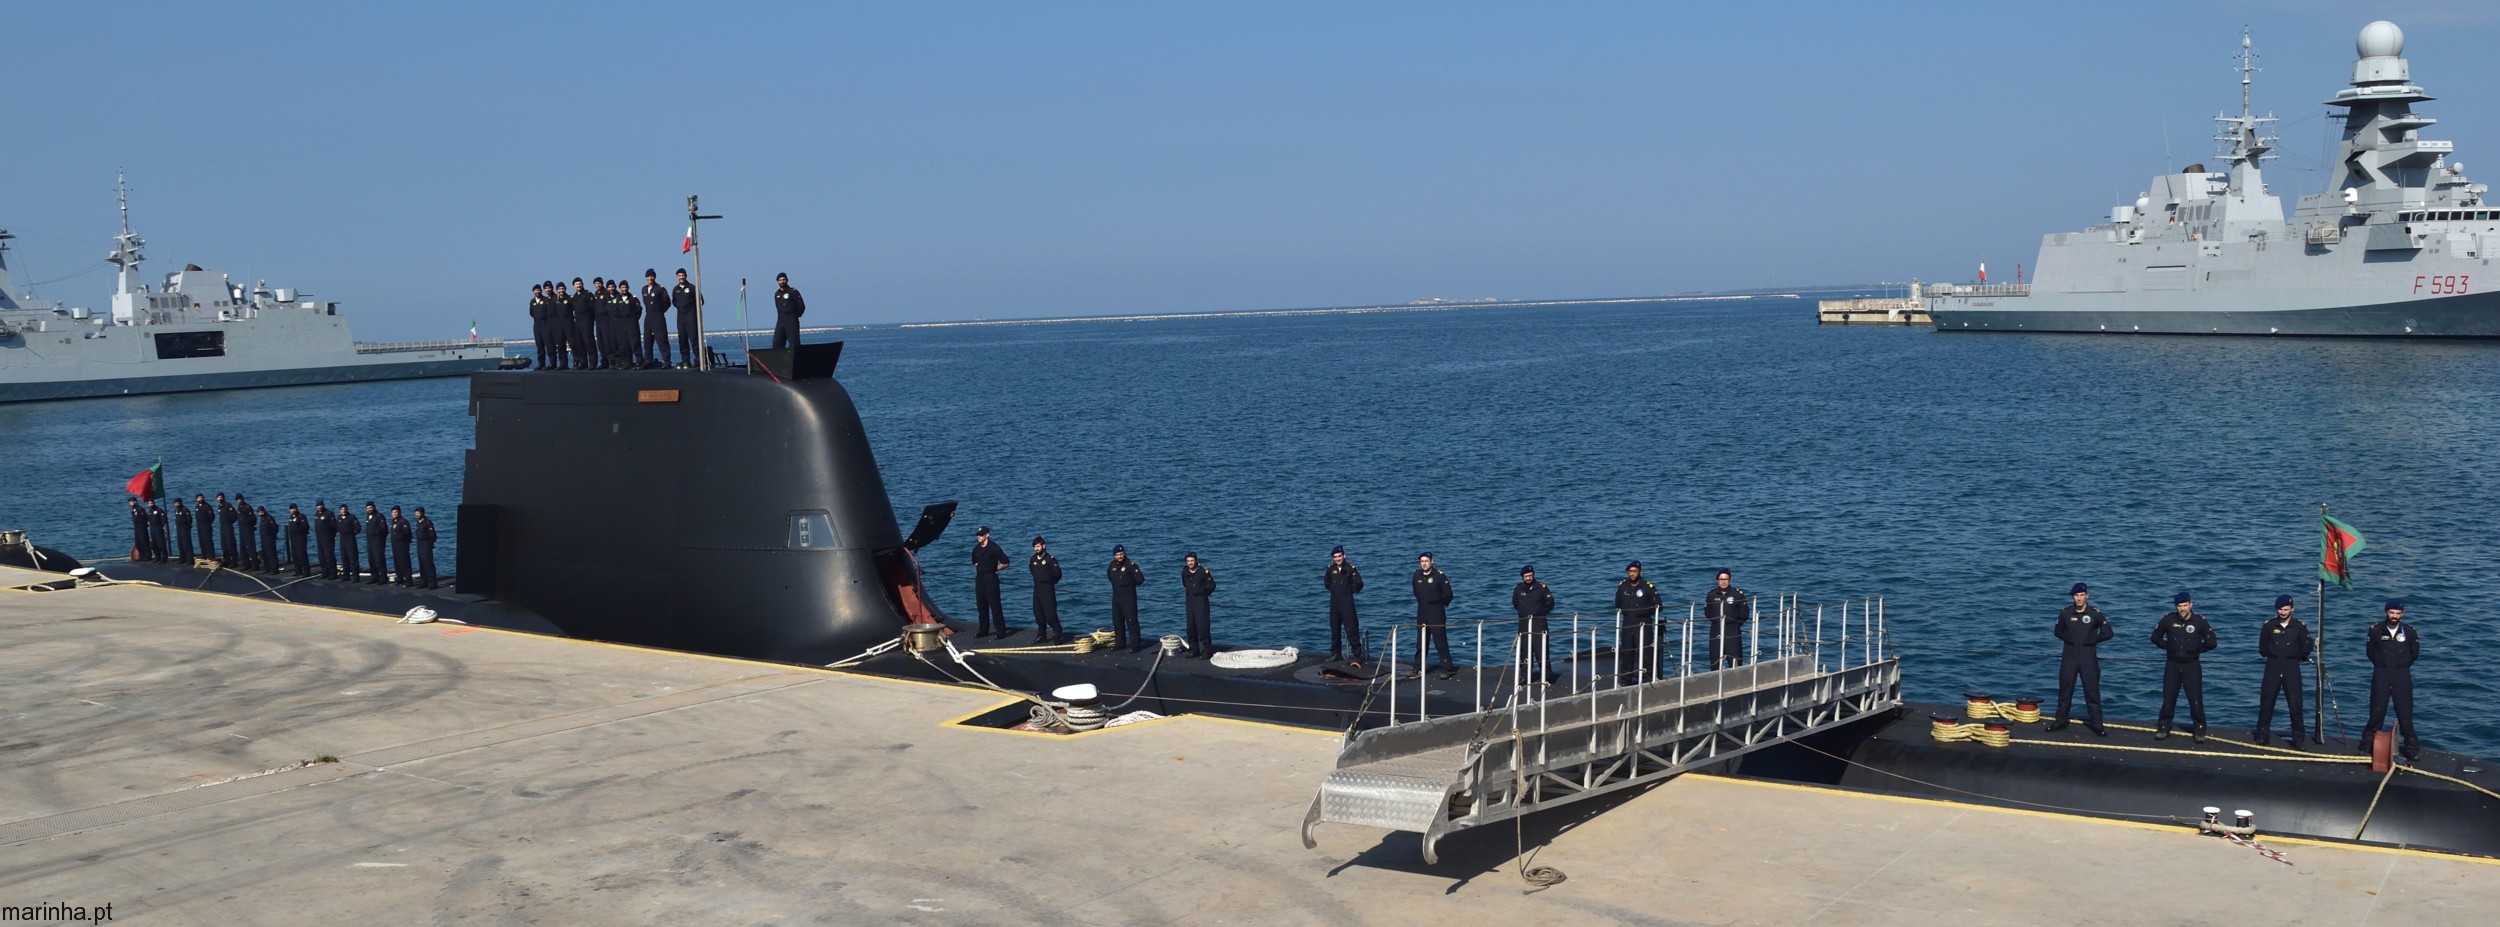 s-161 nrp arpao tridente class type 209pn attack submarine ssk aip portuguese navy marinha 09